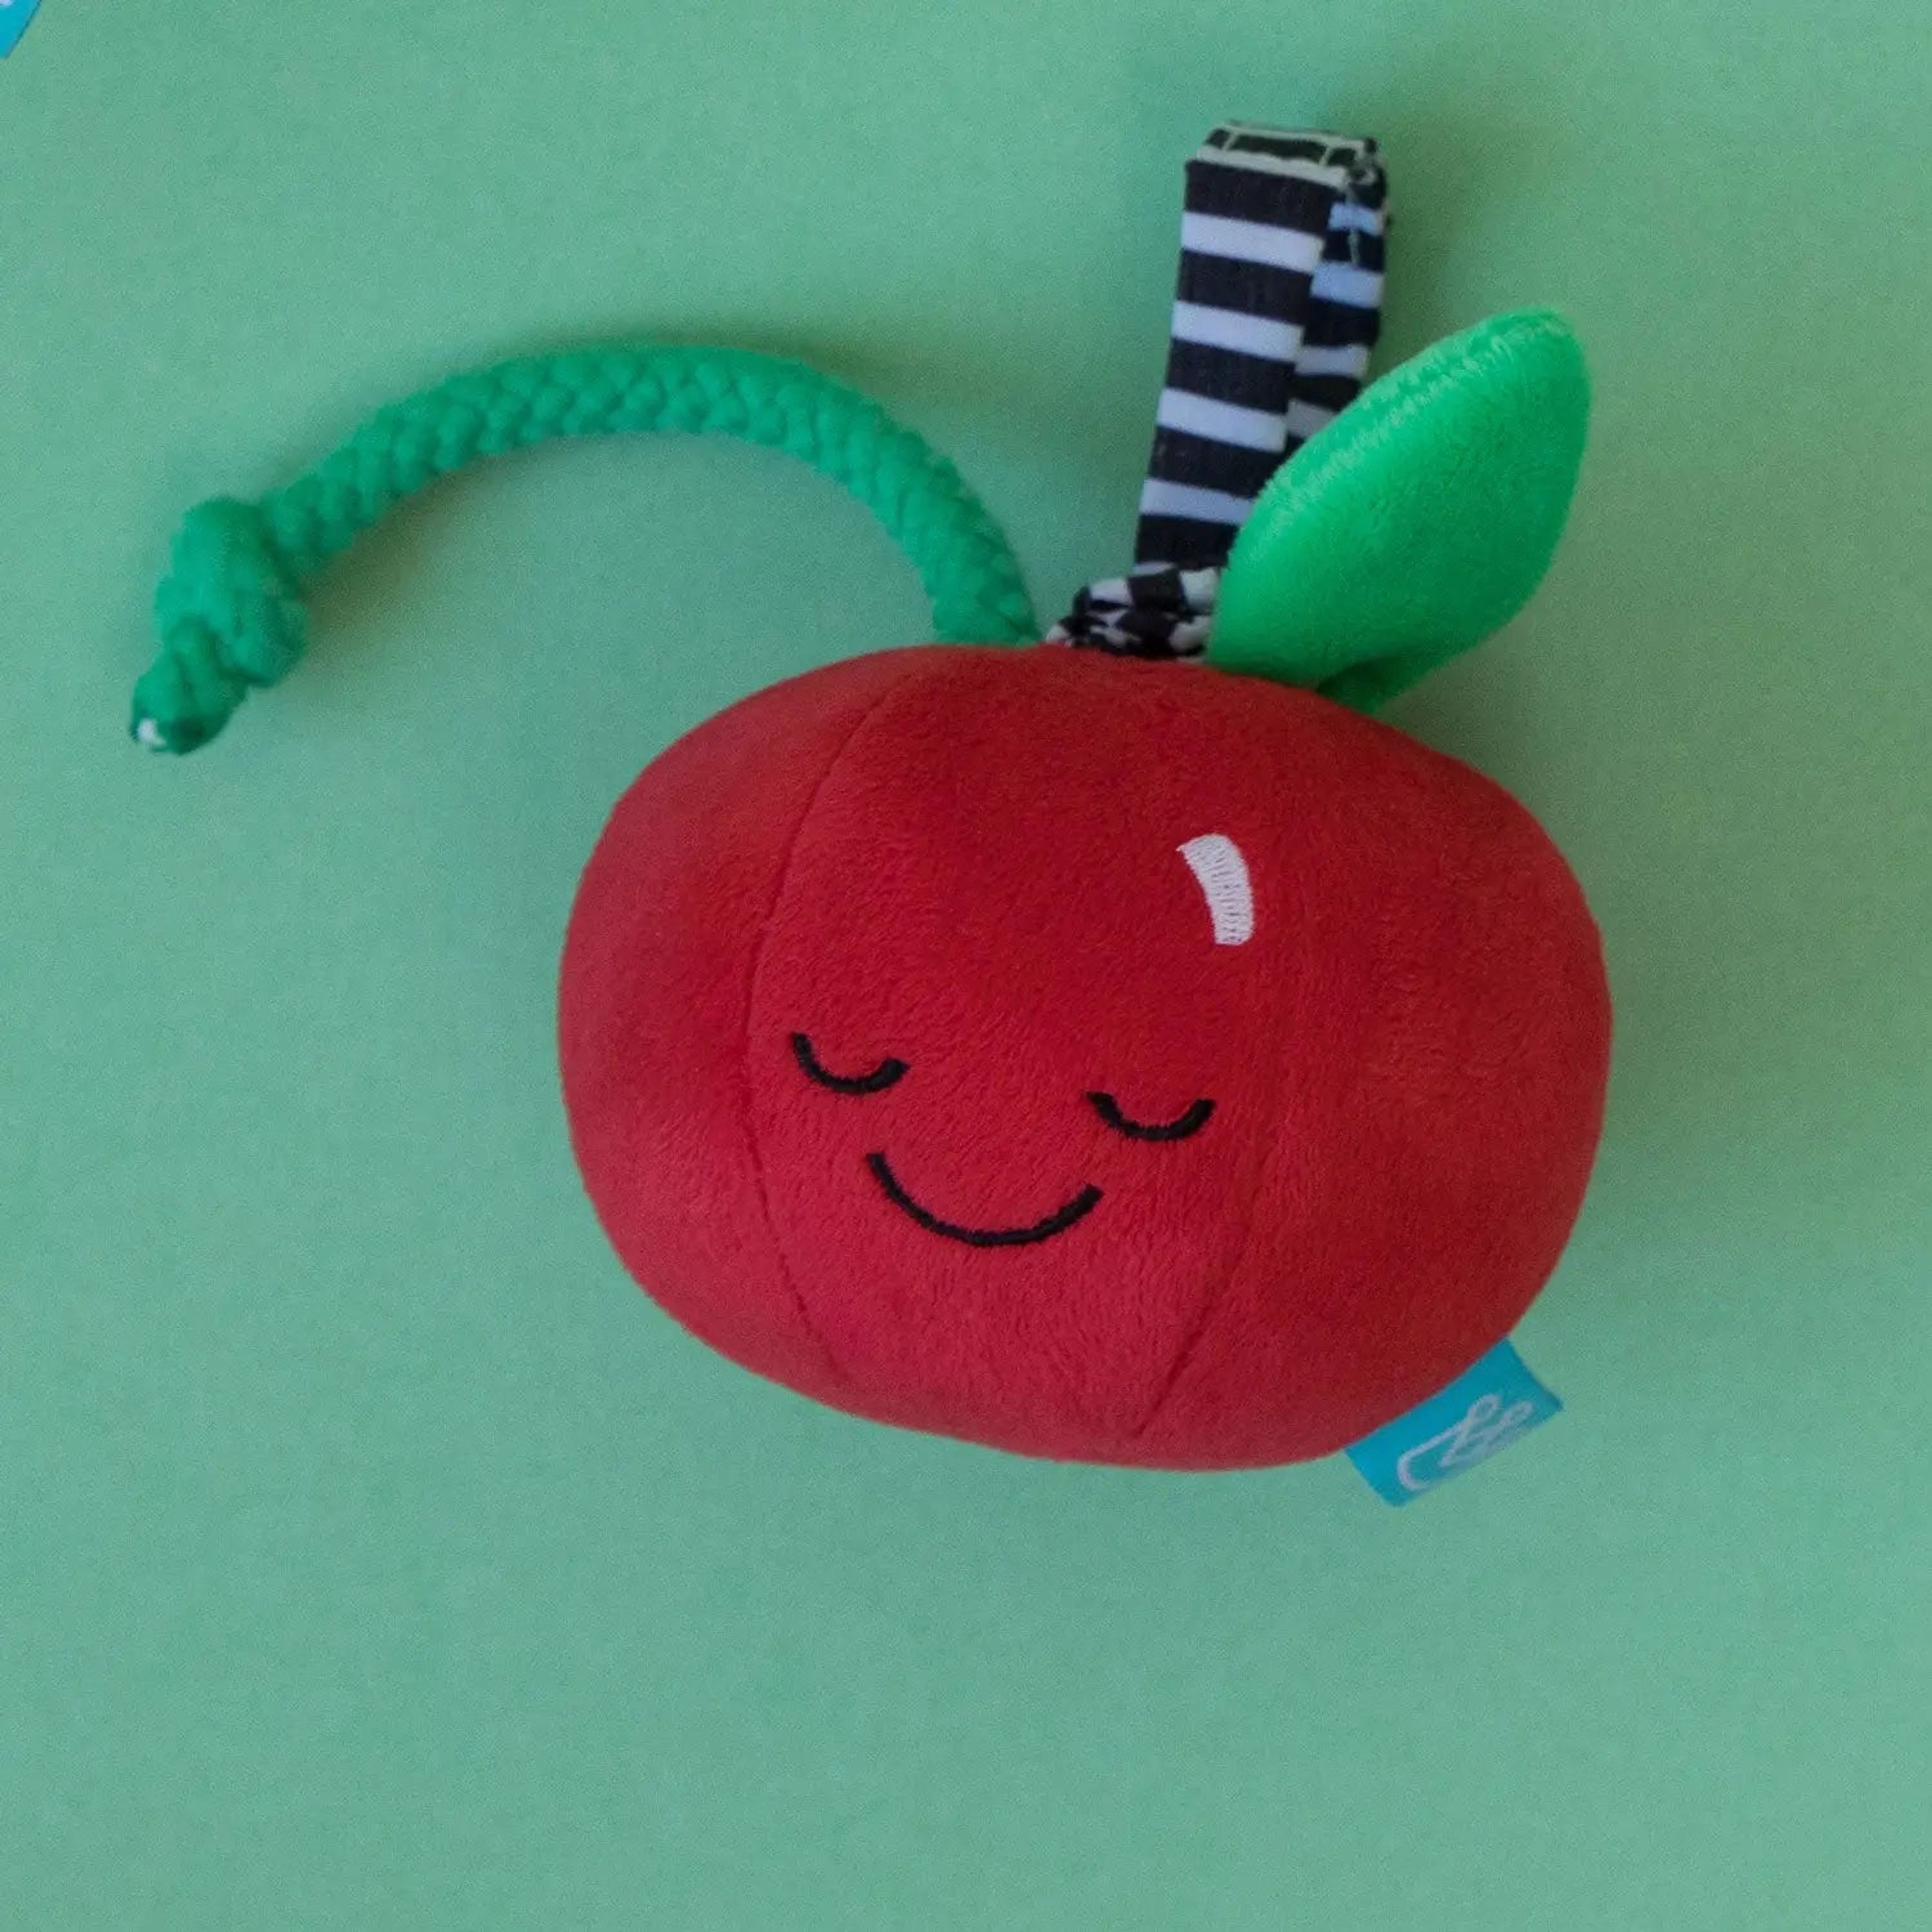 Mini-Apple Farm Cherry Pull Musical Infant Toy